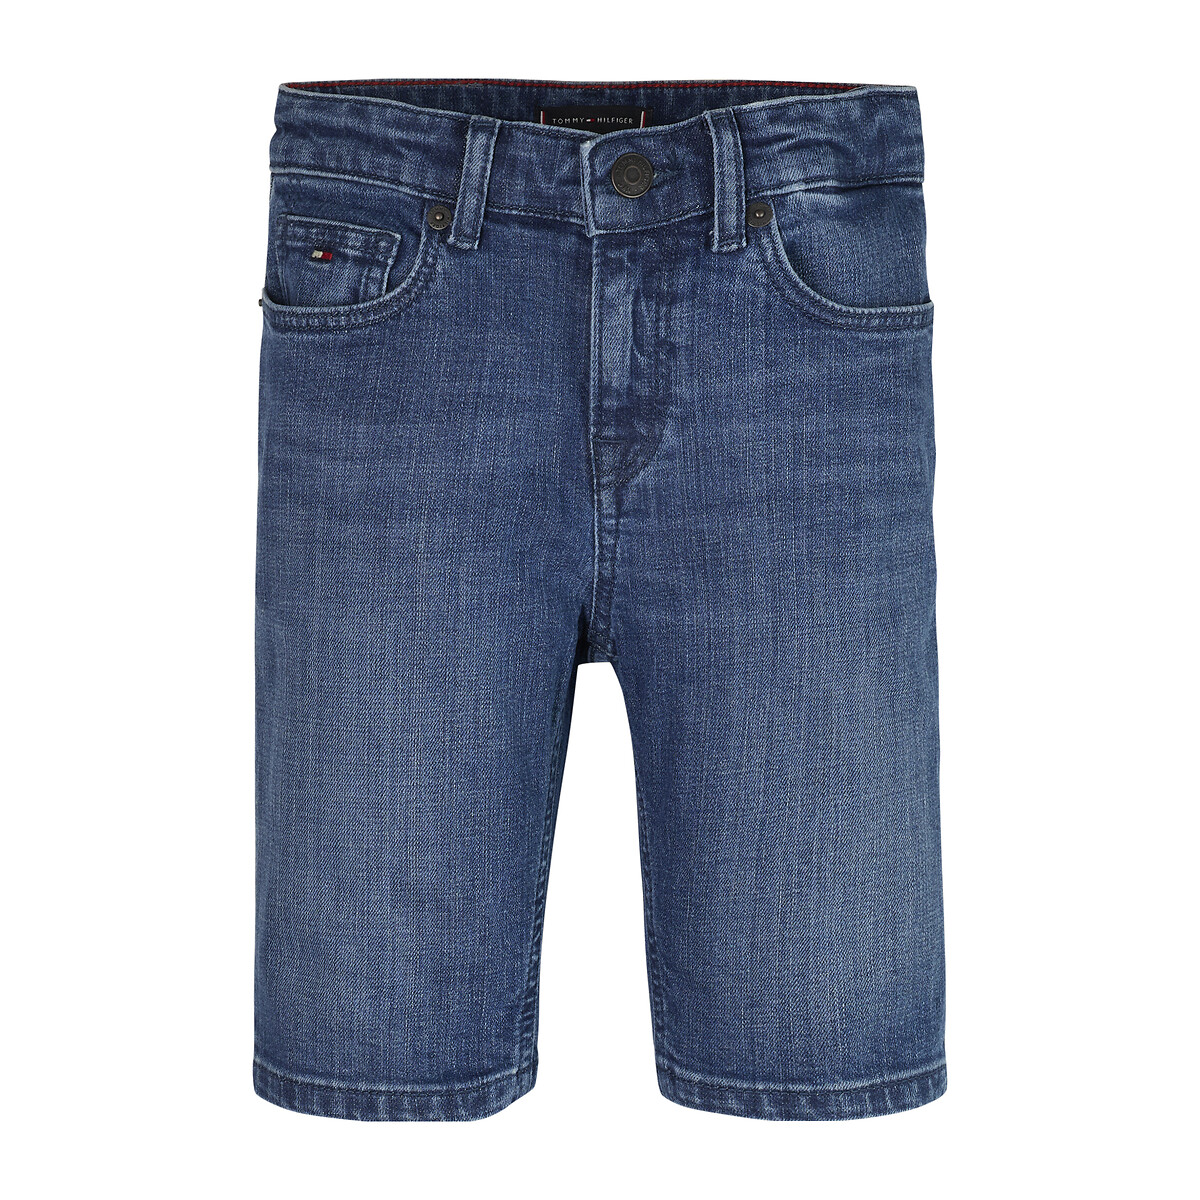 Recycled cotton denim, | shorts bermuda Tommy Hilfiger in La blue, denim Redoute